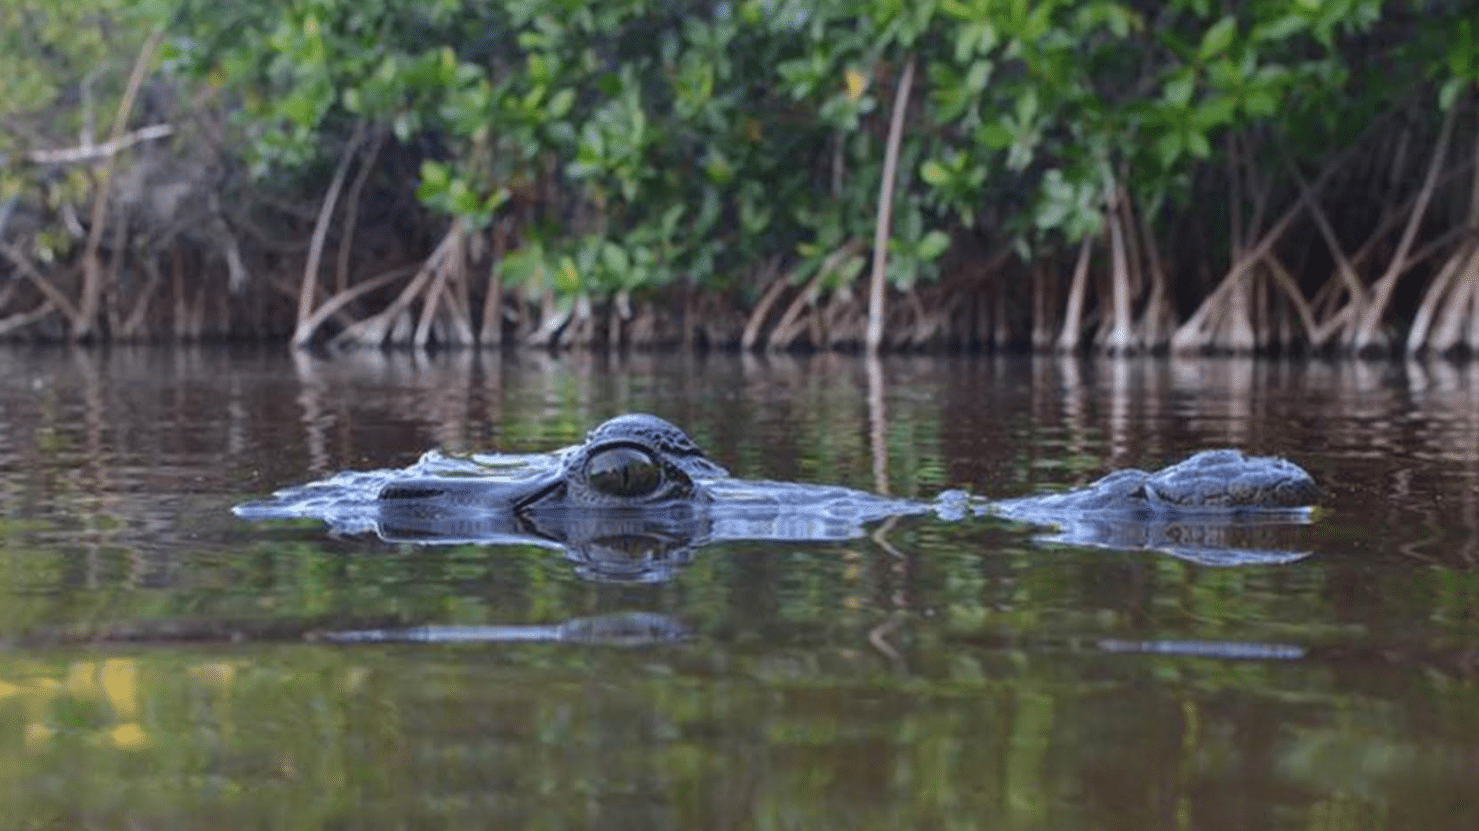 Changing Seas: American crocodiles face an uncertain future in Jamaica.